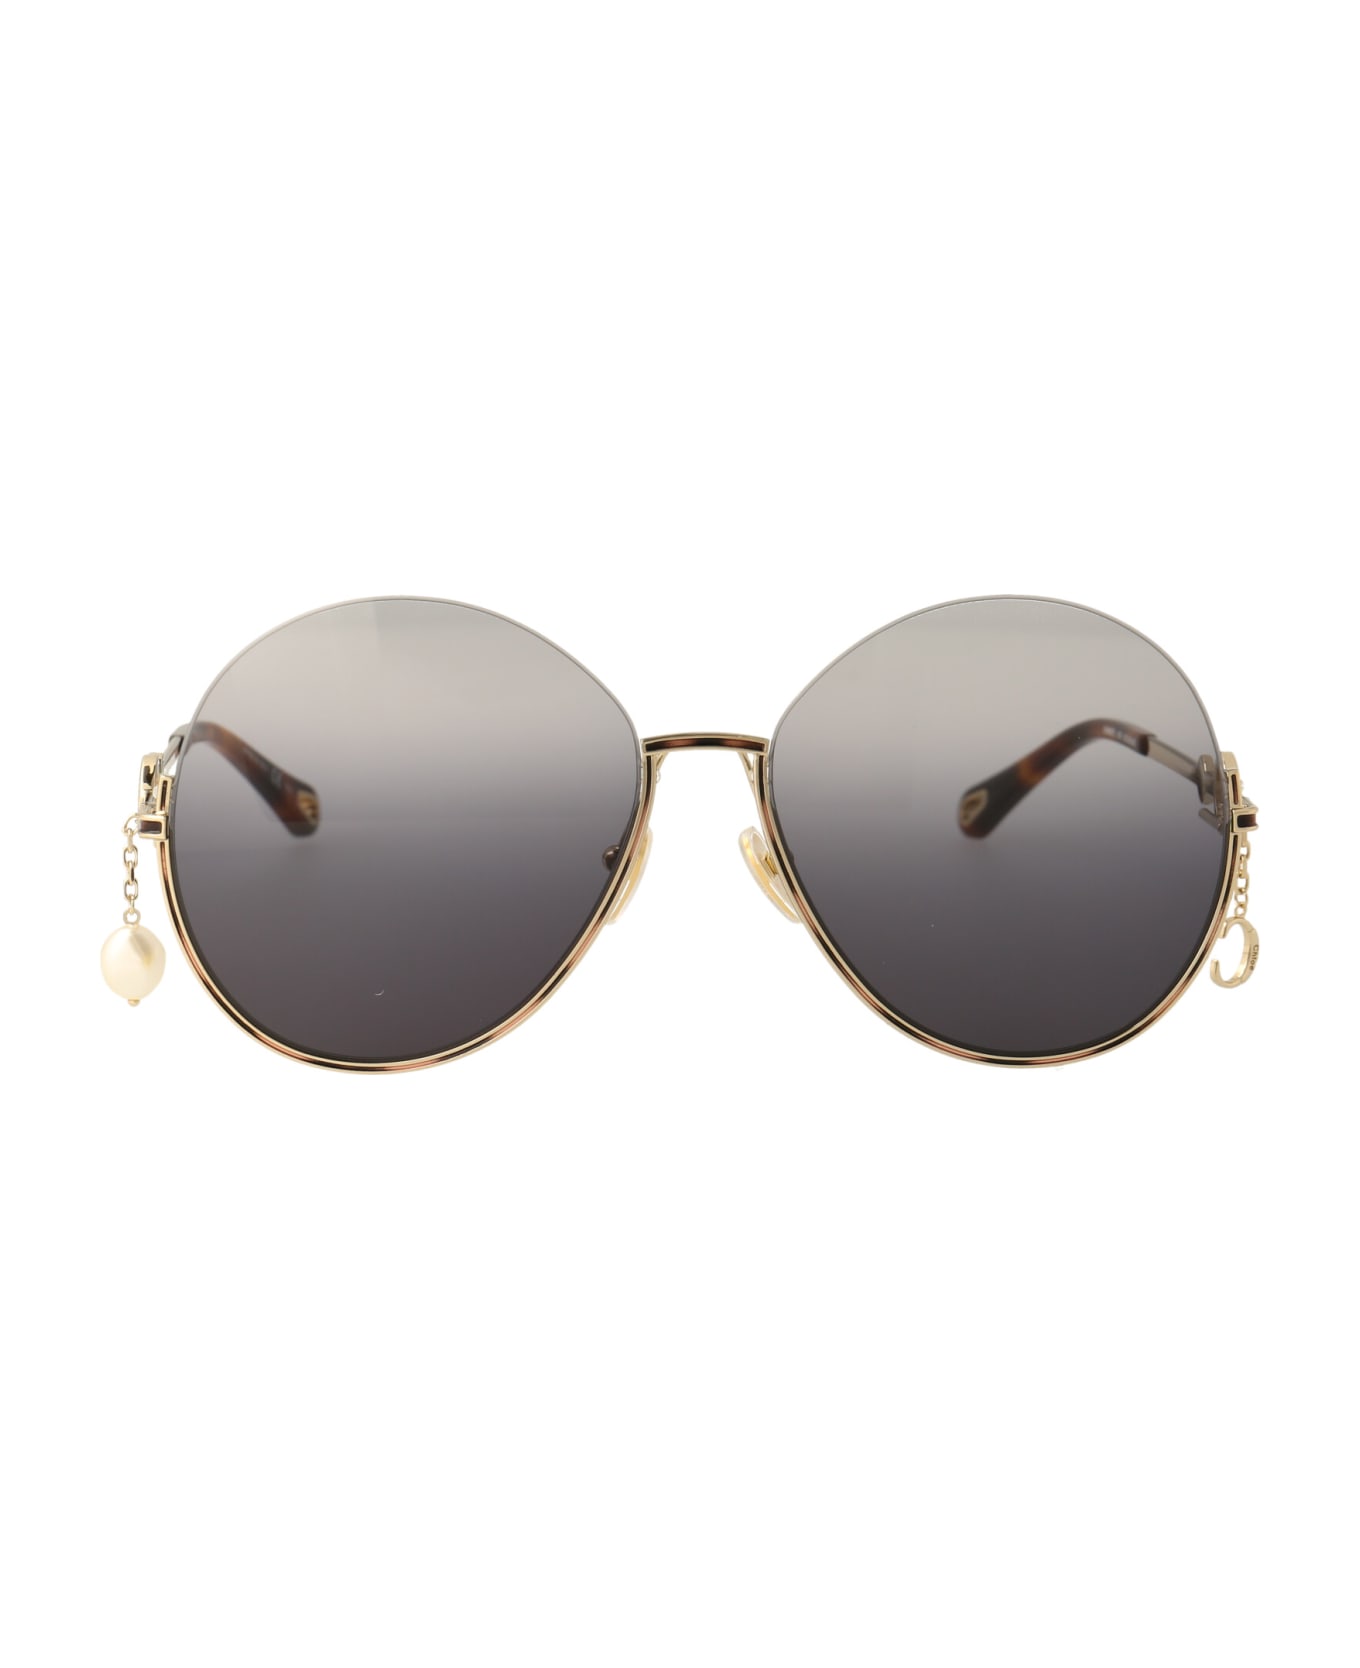 Chloé Eyewear Ch0067s Sunglasses - 001 GOLD GOLD BLUE